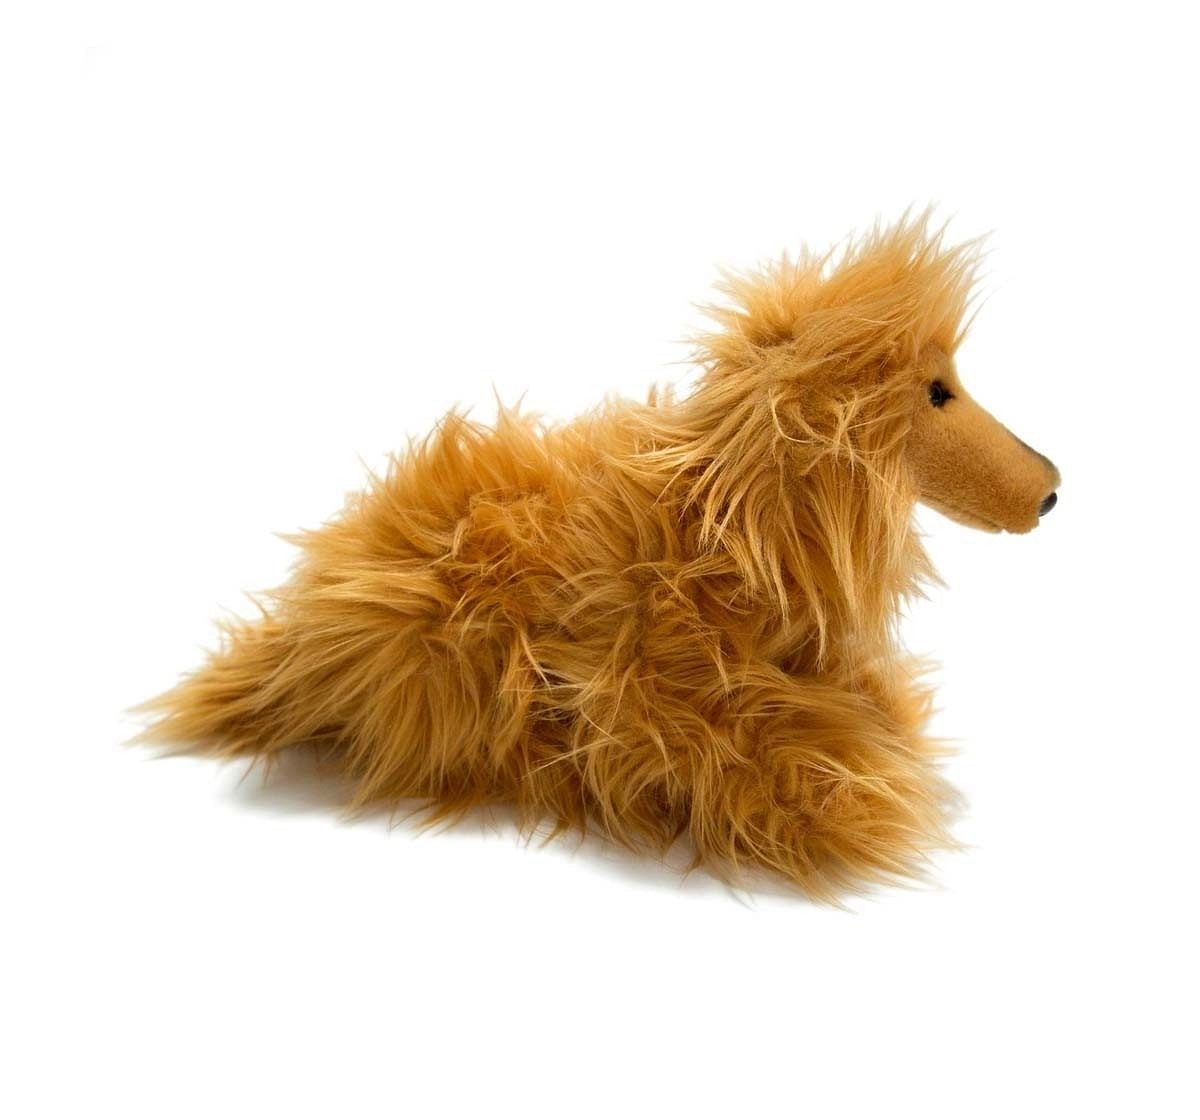 Hamleys Afghan Hound Soft Toy Animals & Birds for Kids Age 3Y+ - 19 Cm (Brown)